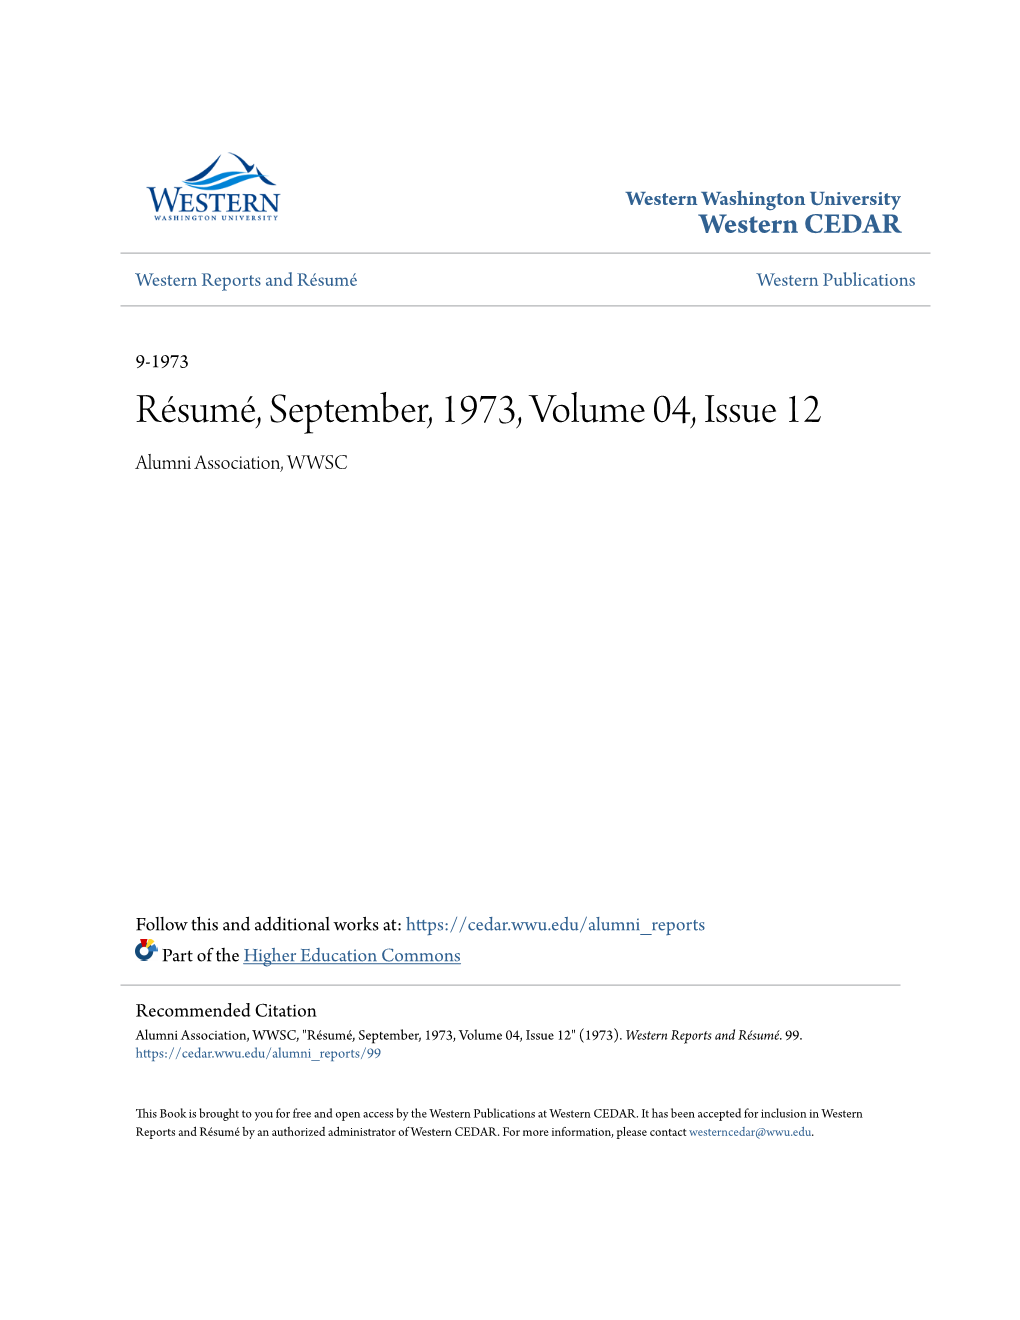 Résumé, September, 1973, Volume 04, Issue 12 Alumni Association, WWSC